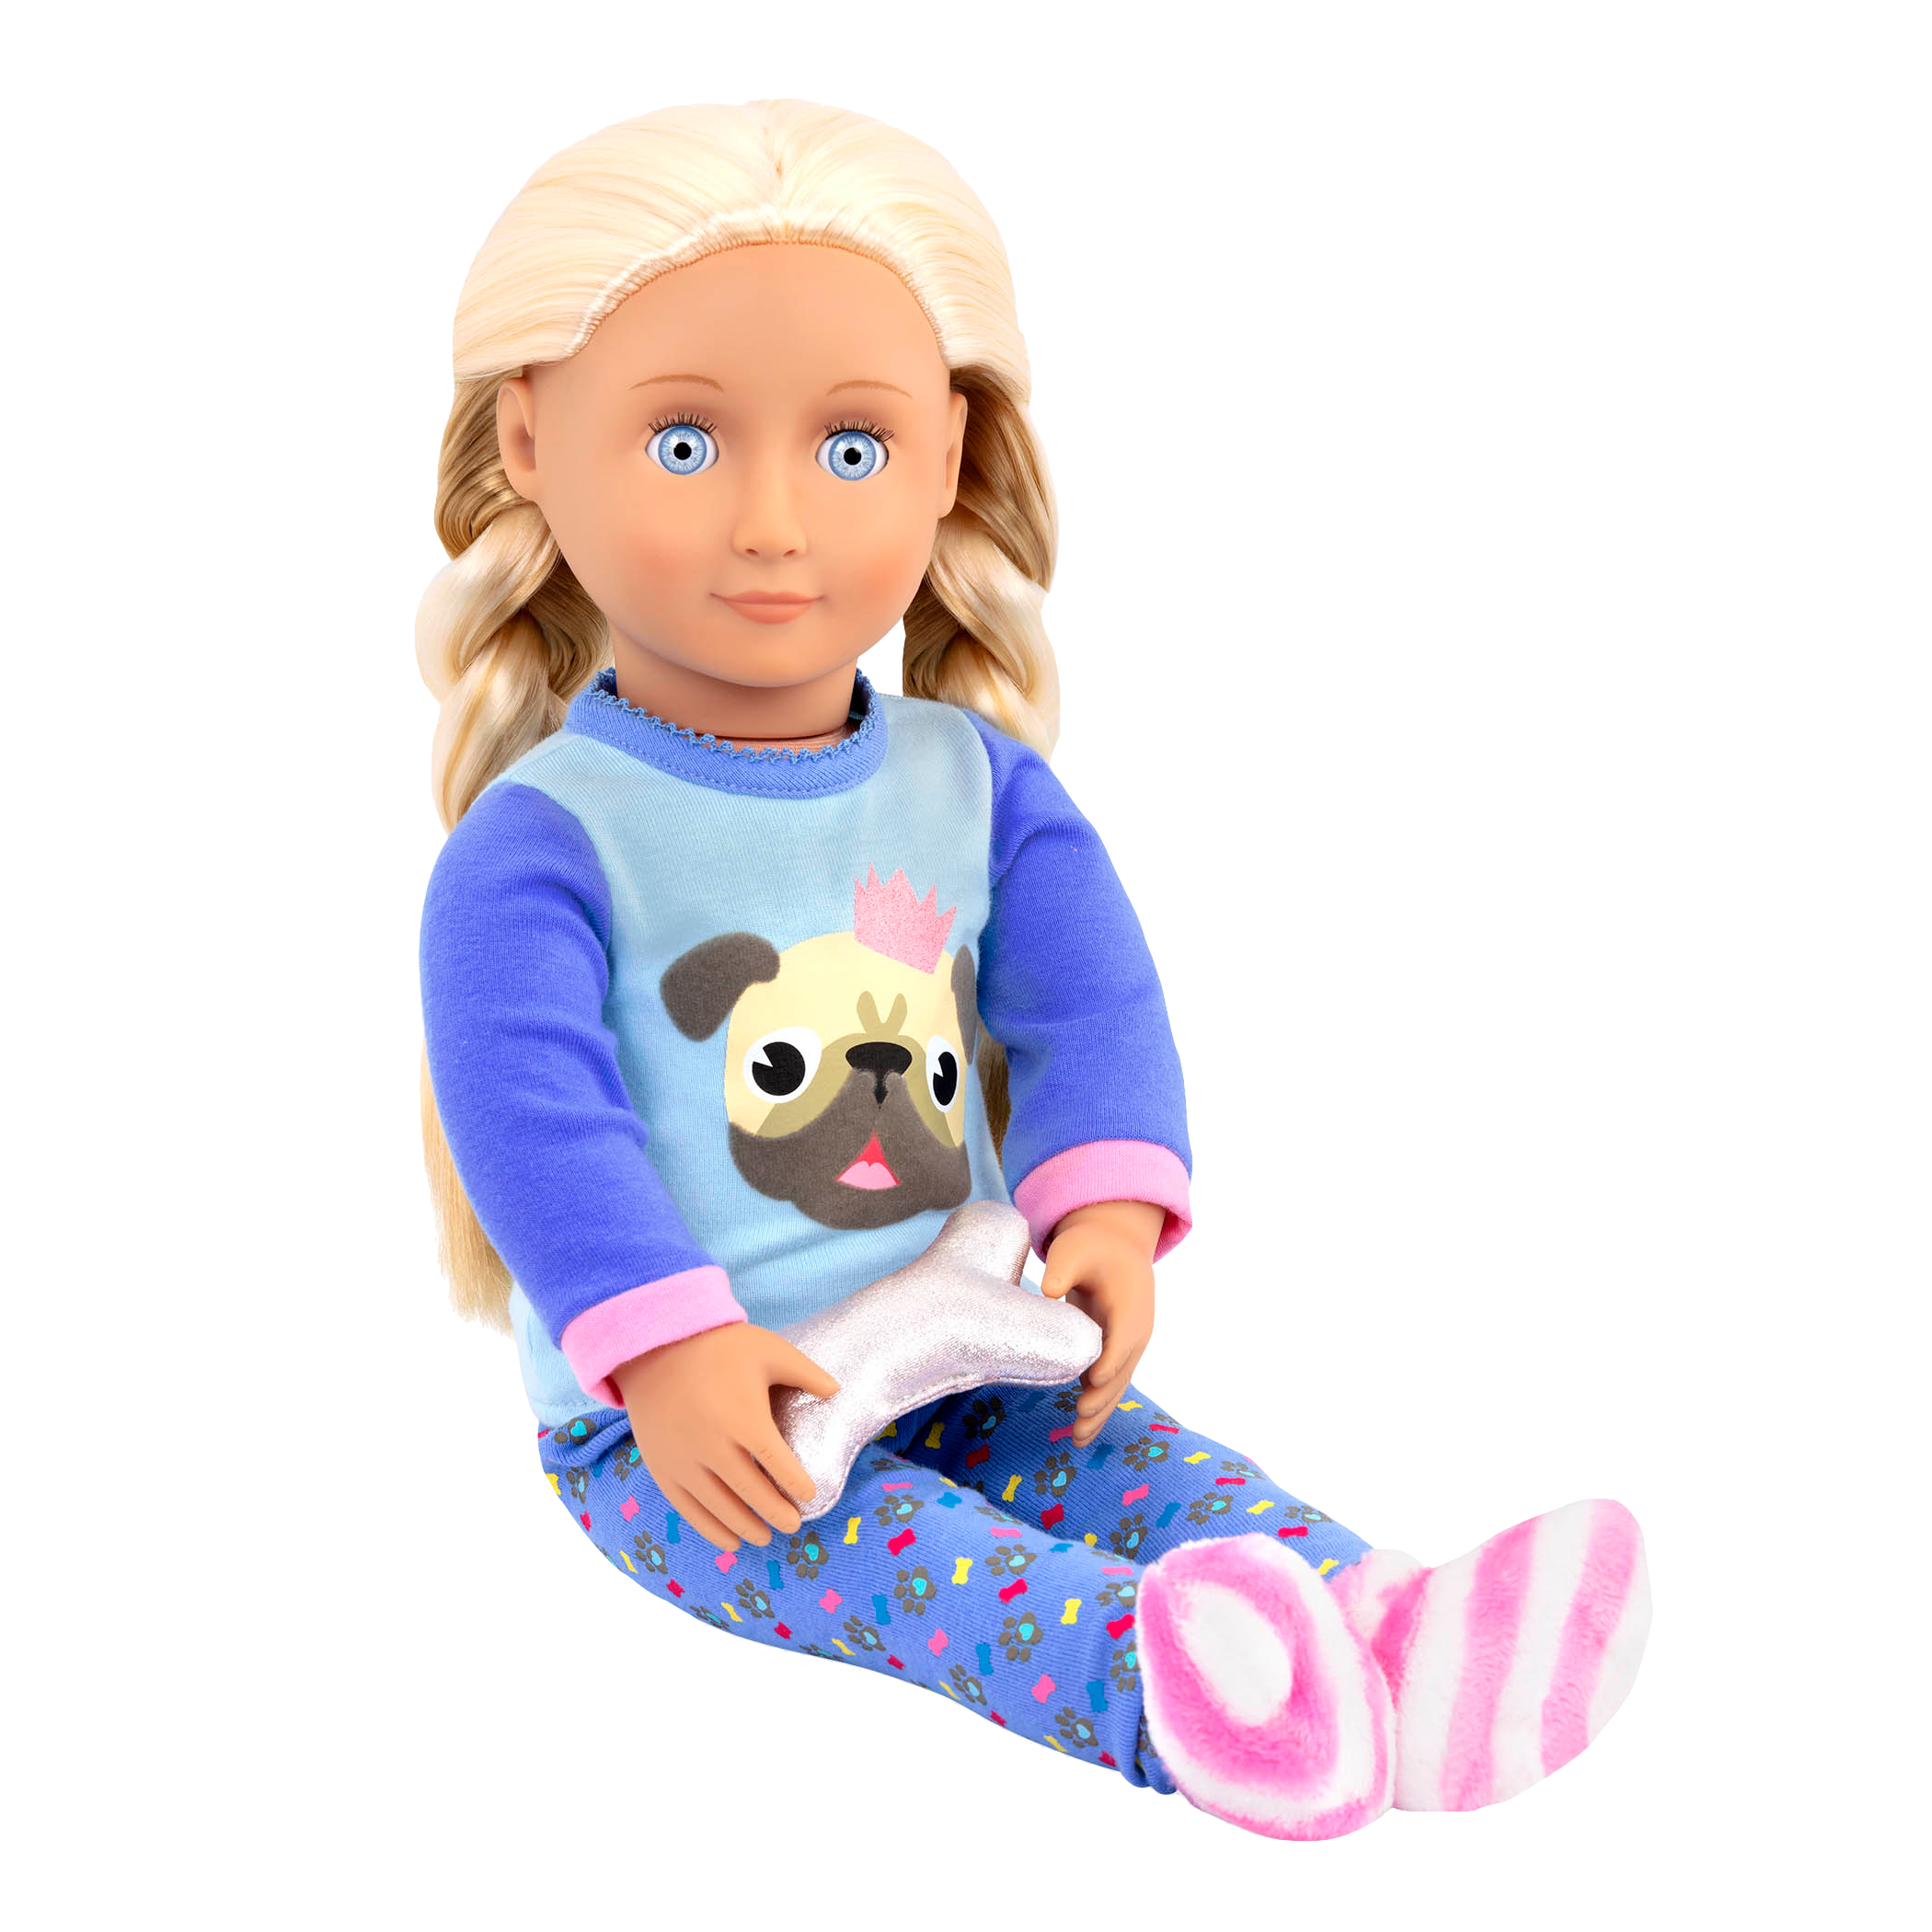 Pug-themed pajamas for 18-inch doll